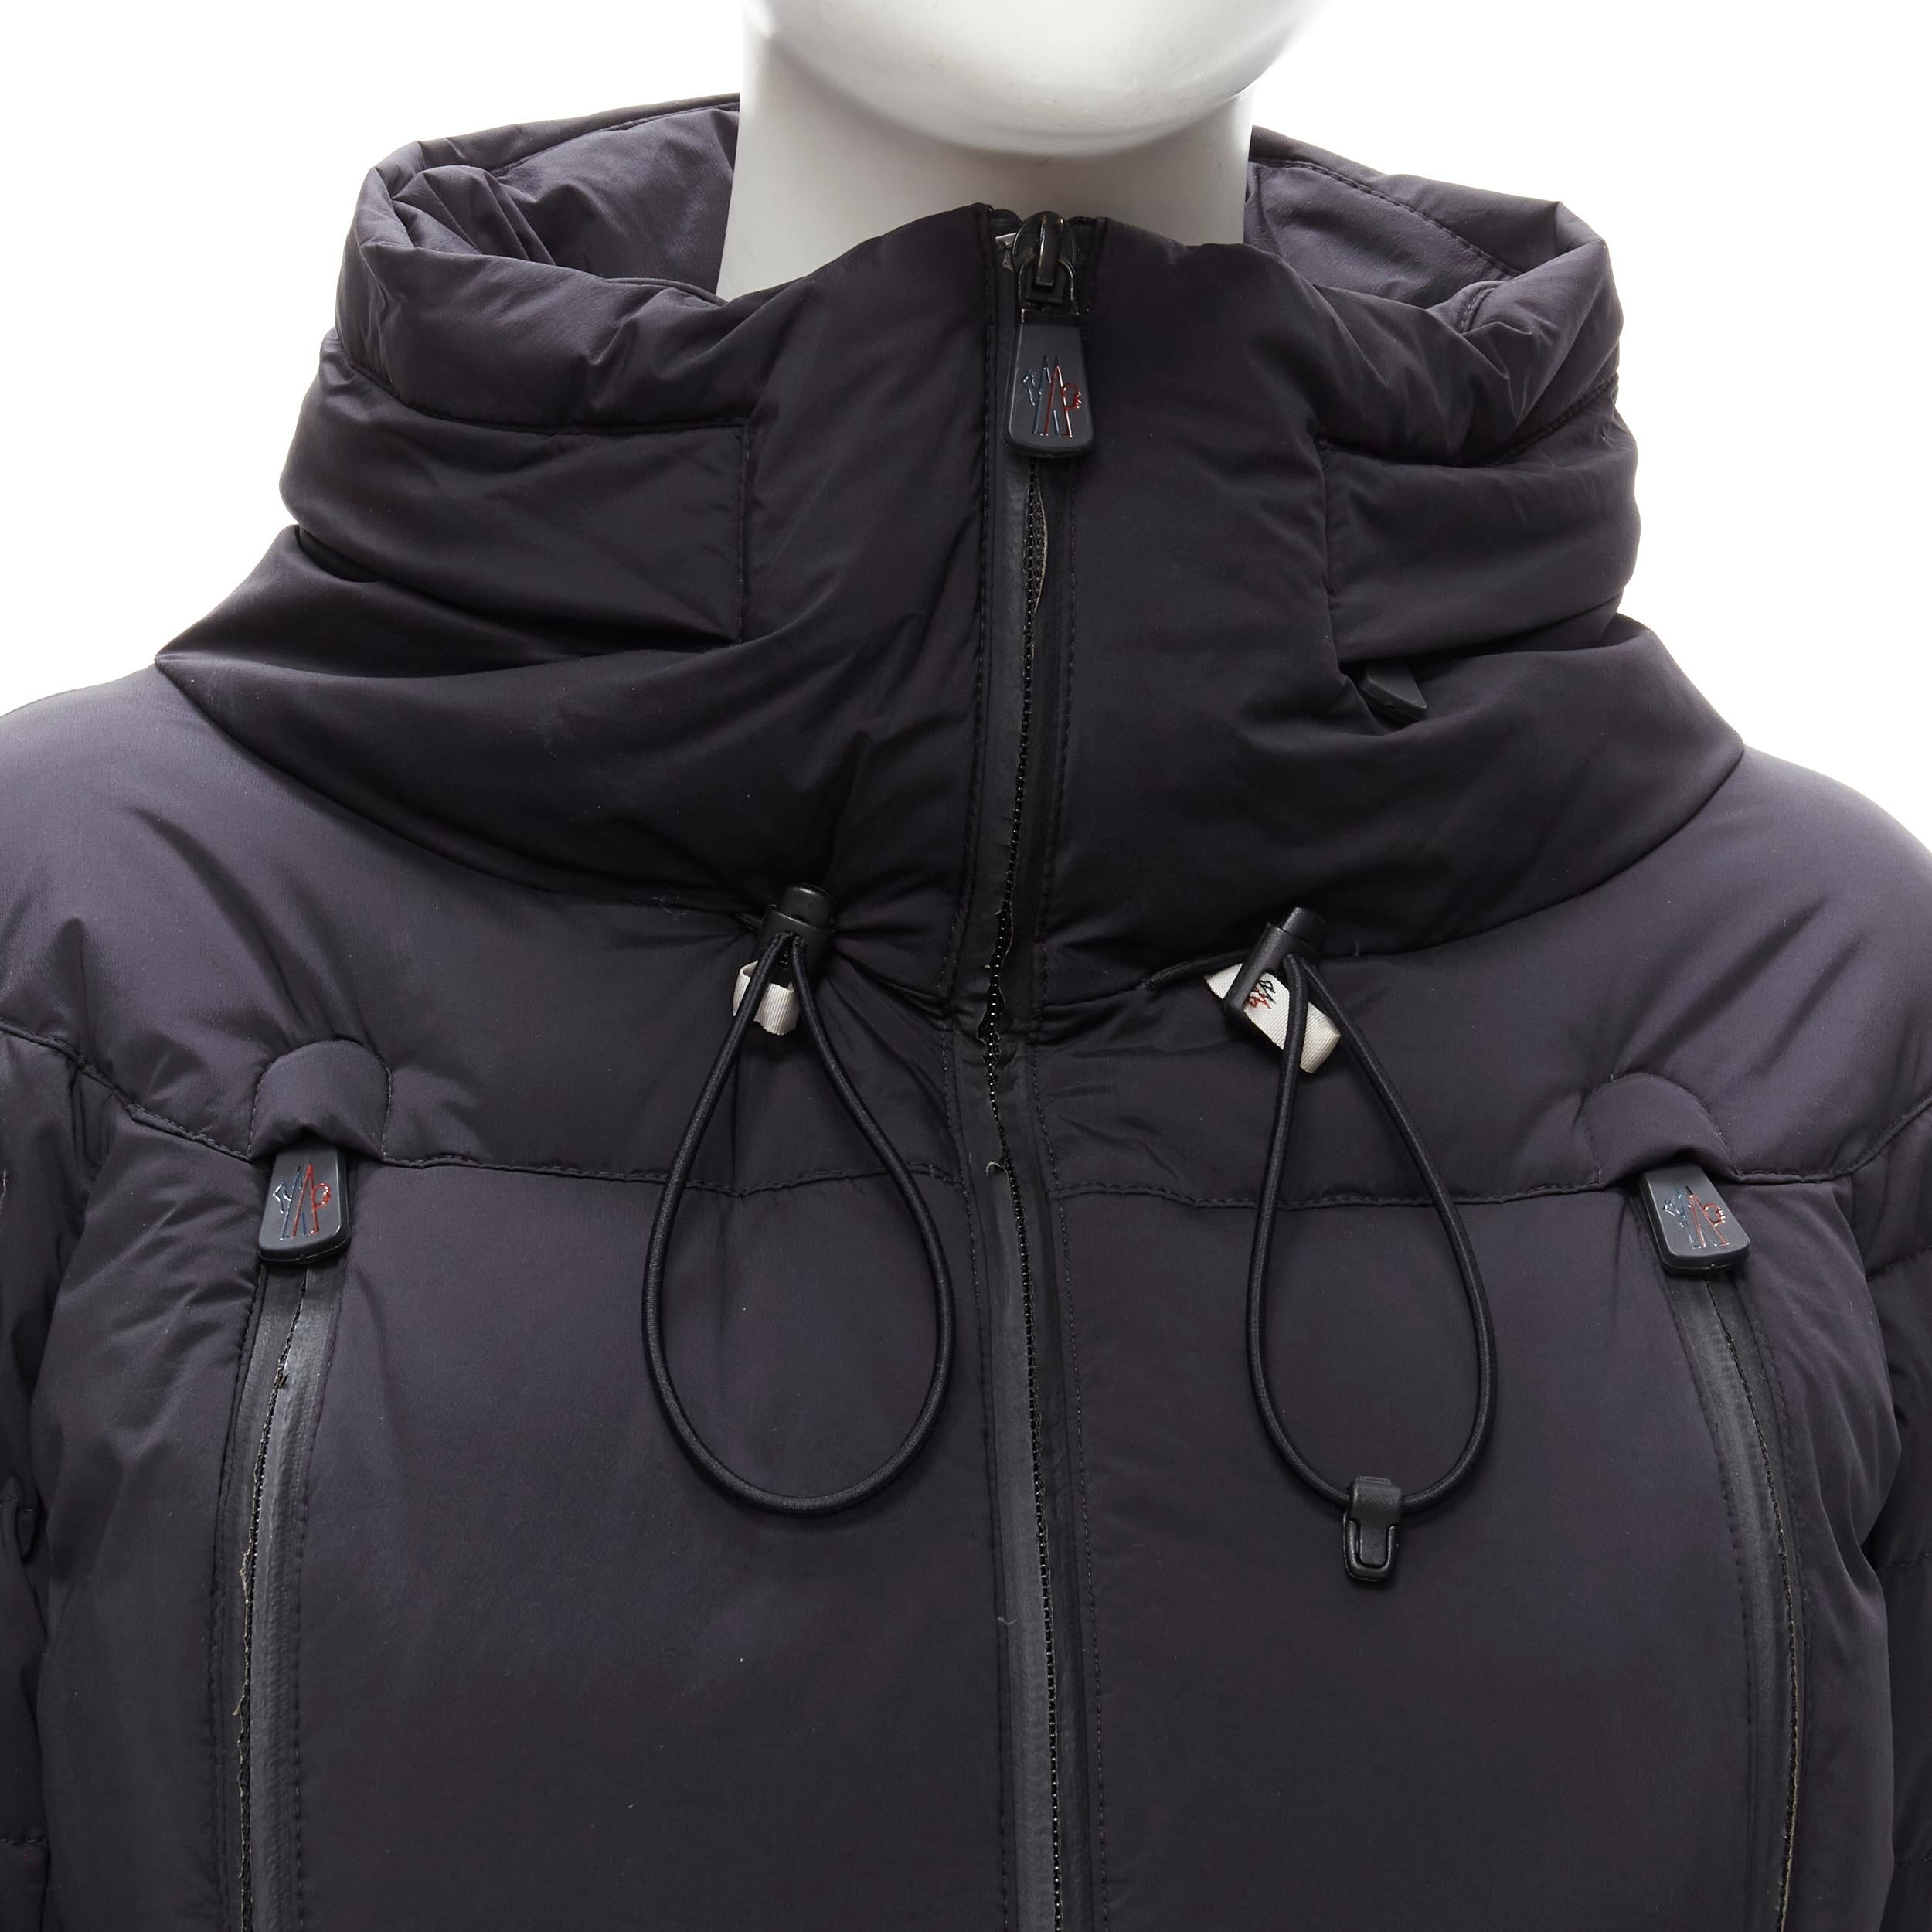 MONCLER GRENOBLE Bear Giubotto black nylon new down puffer jacket Size 1 S 1